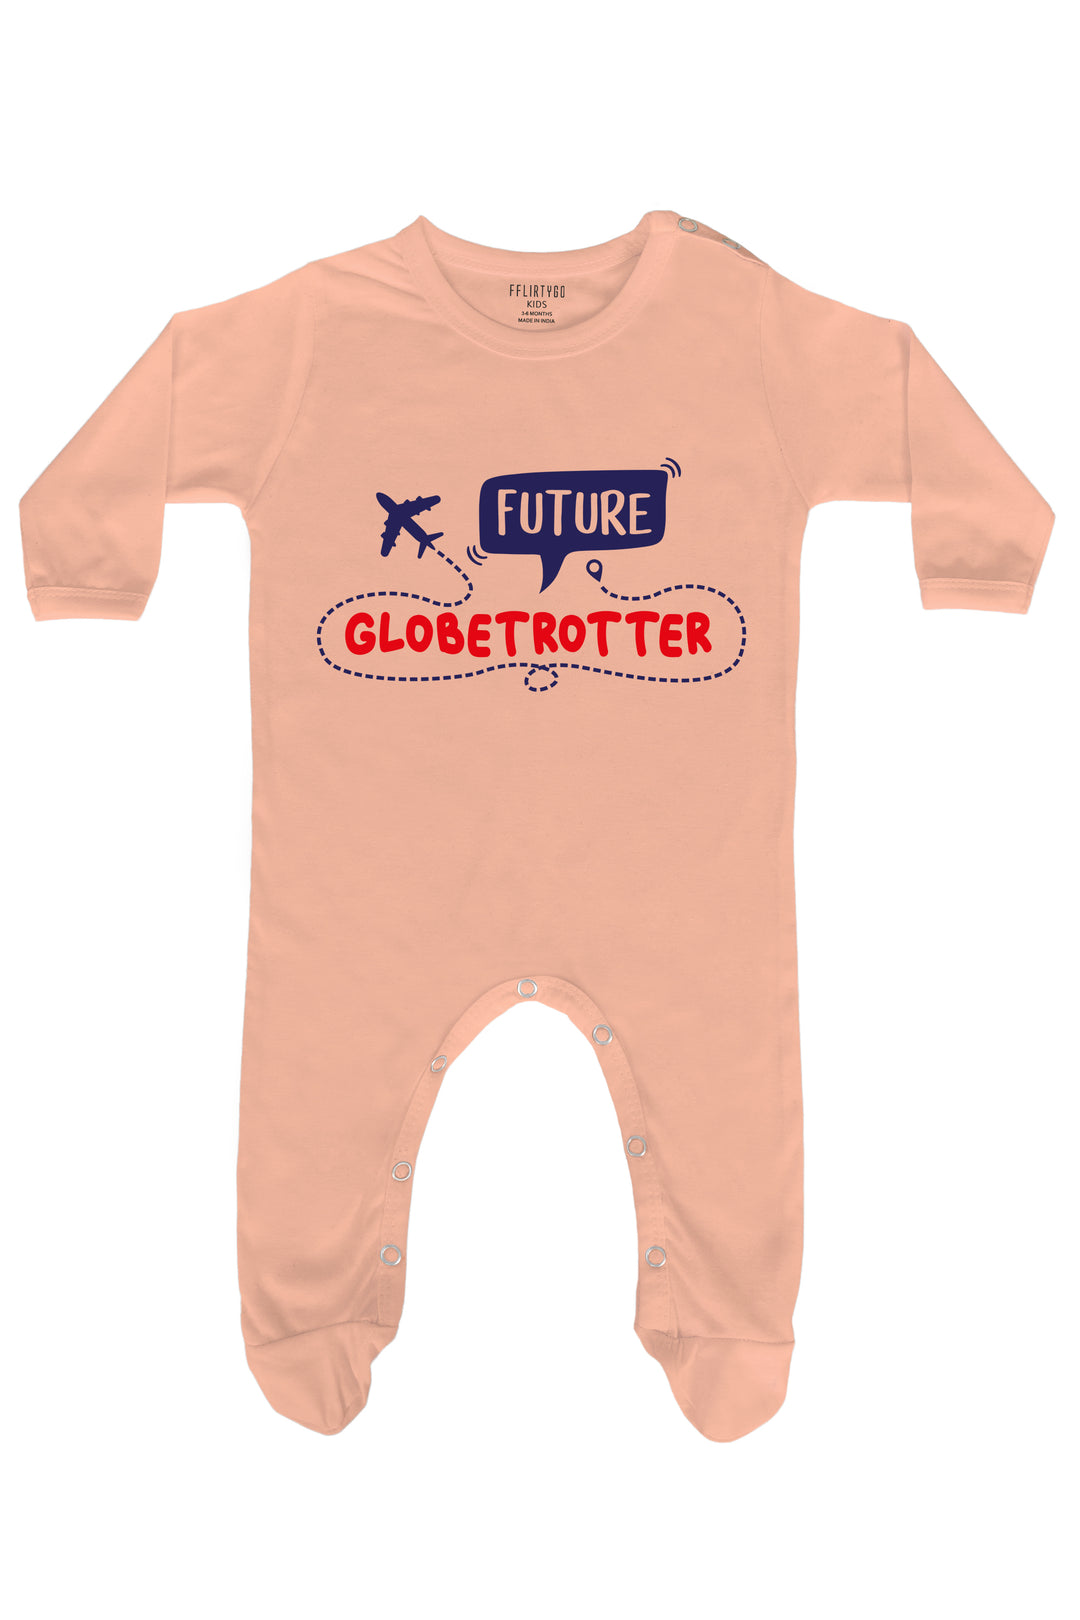 Future Globetrotter